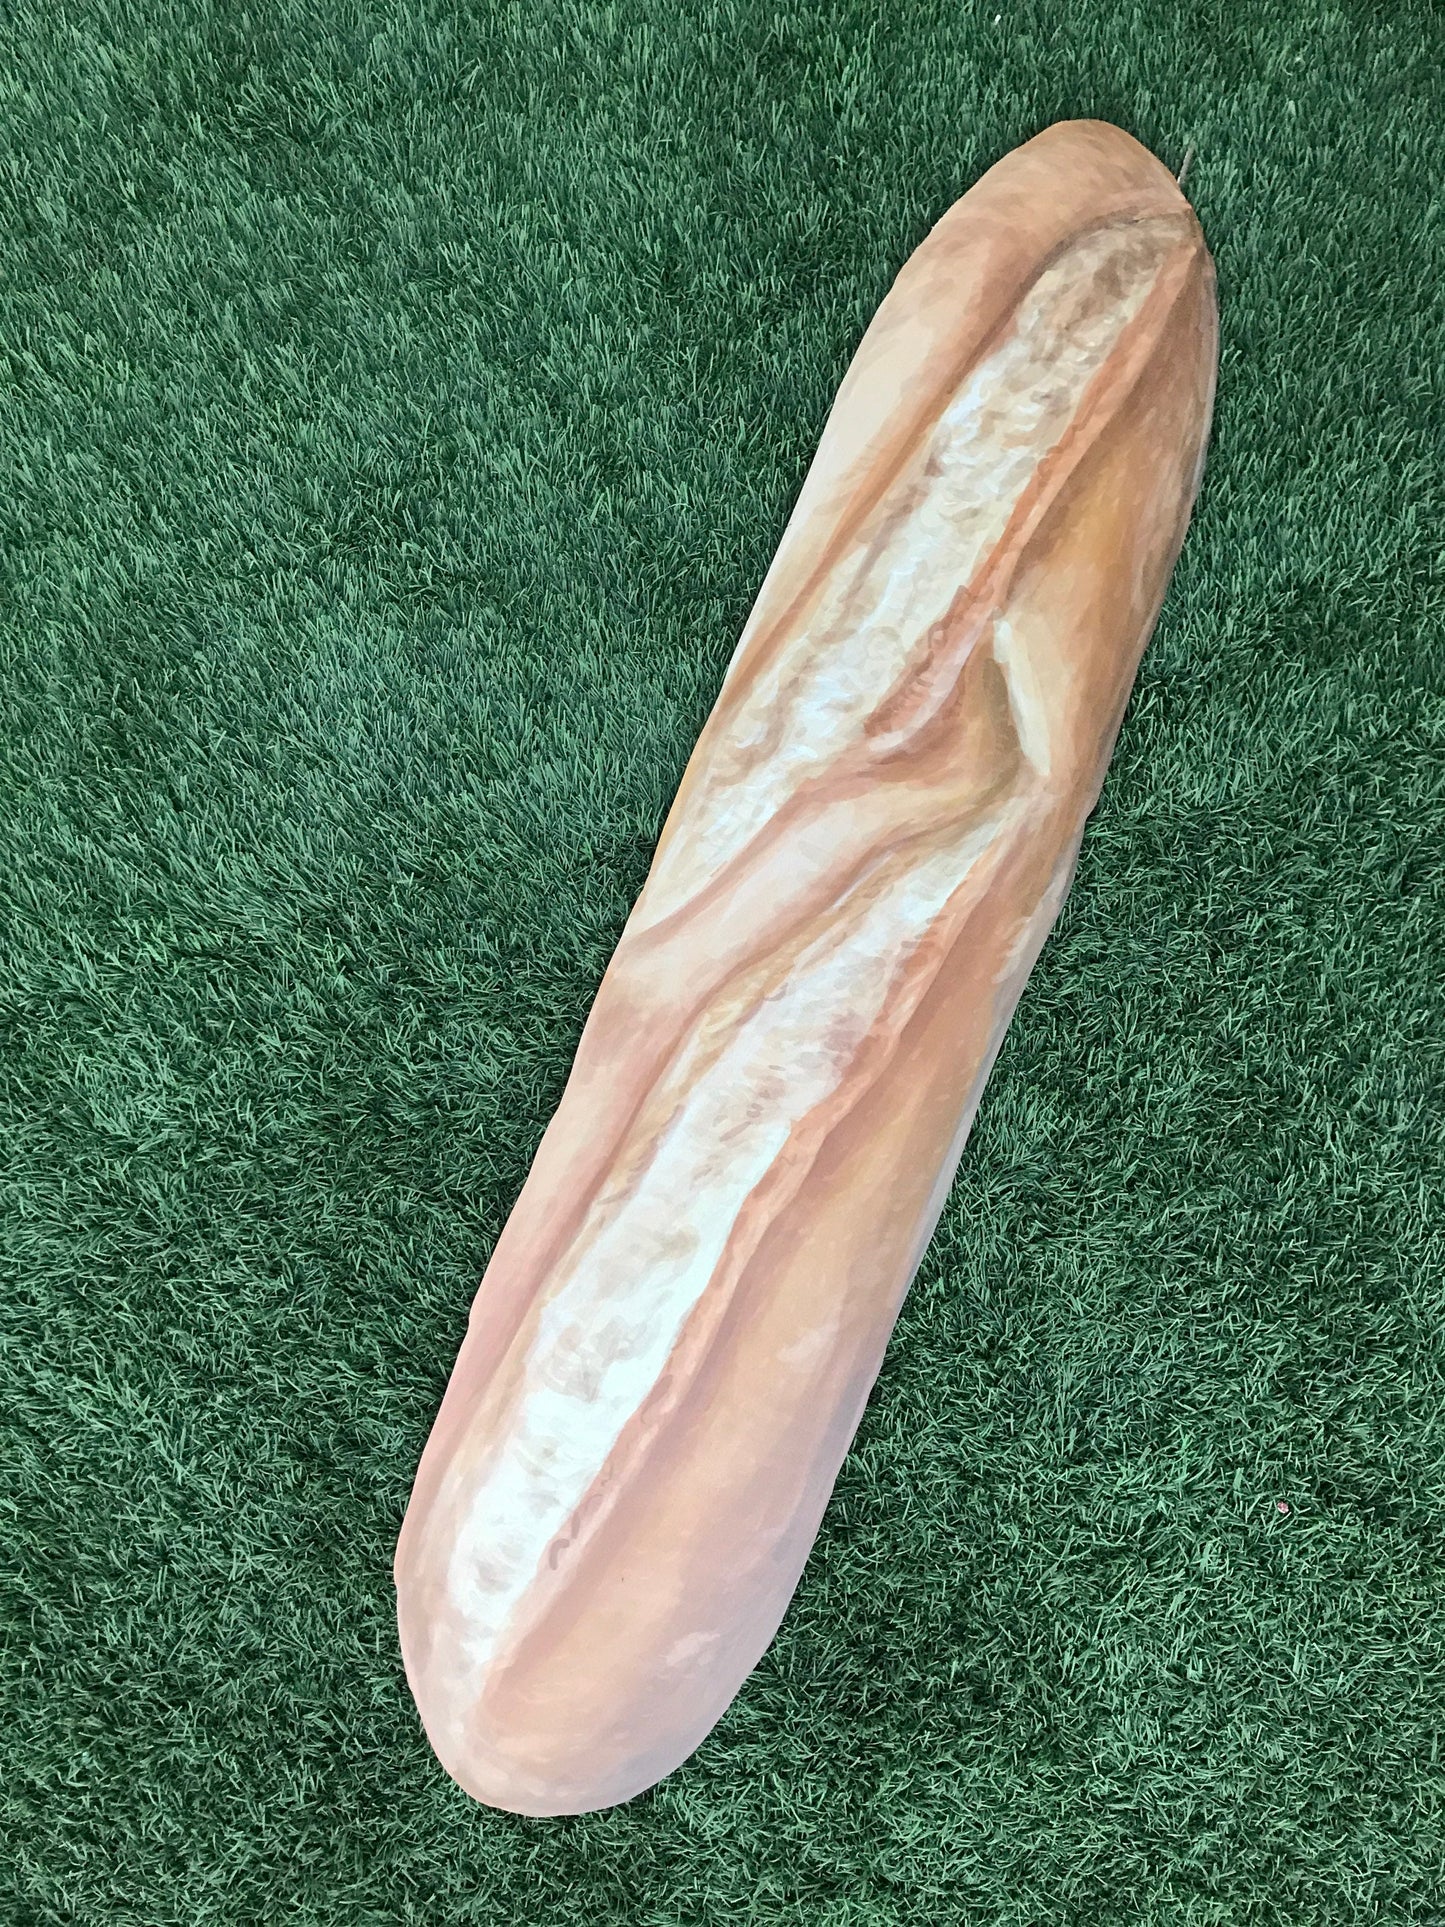 Giant Breadstick